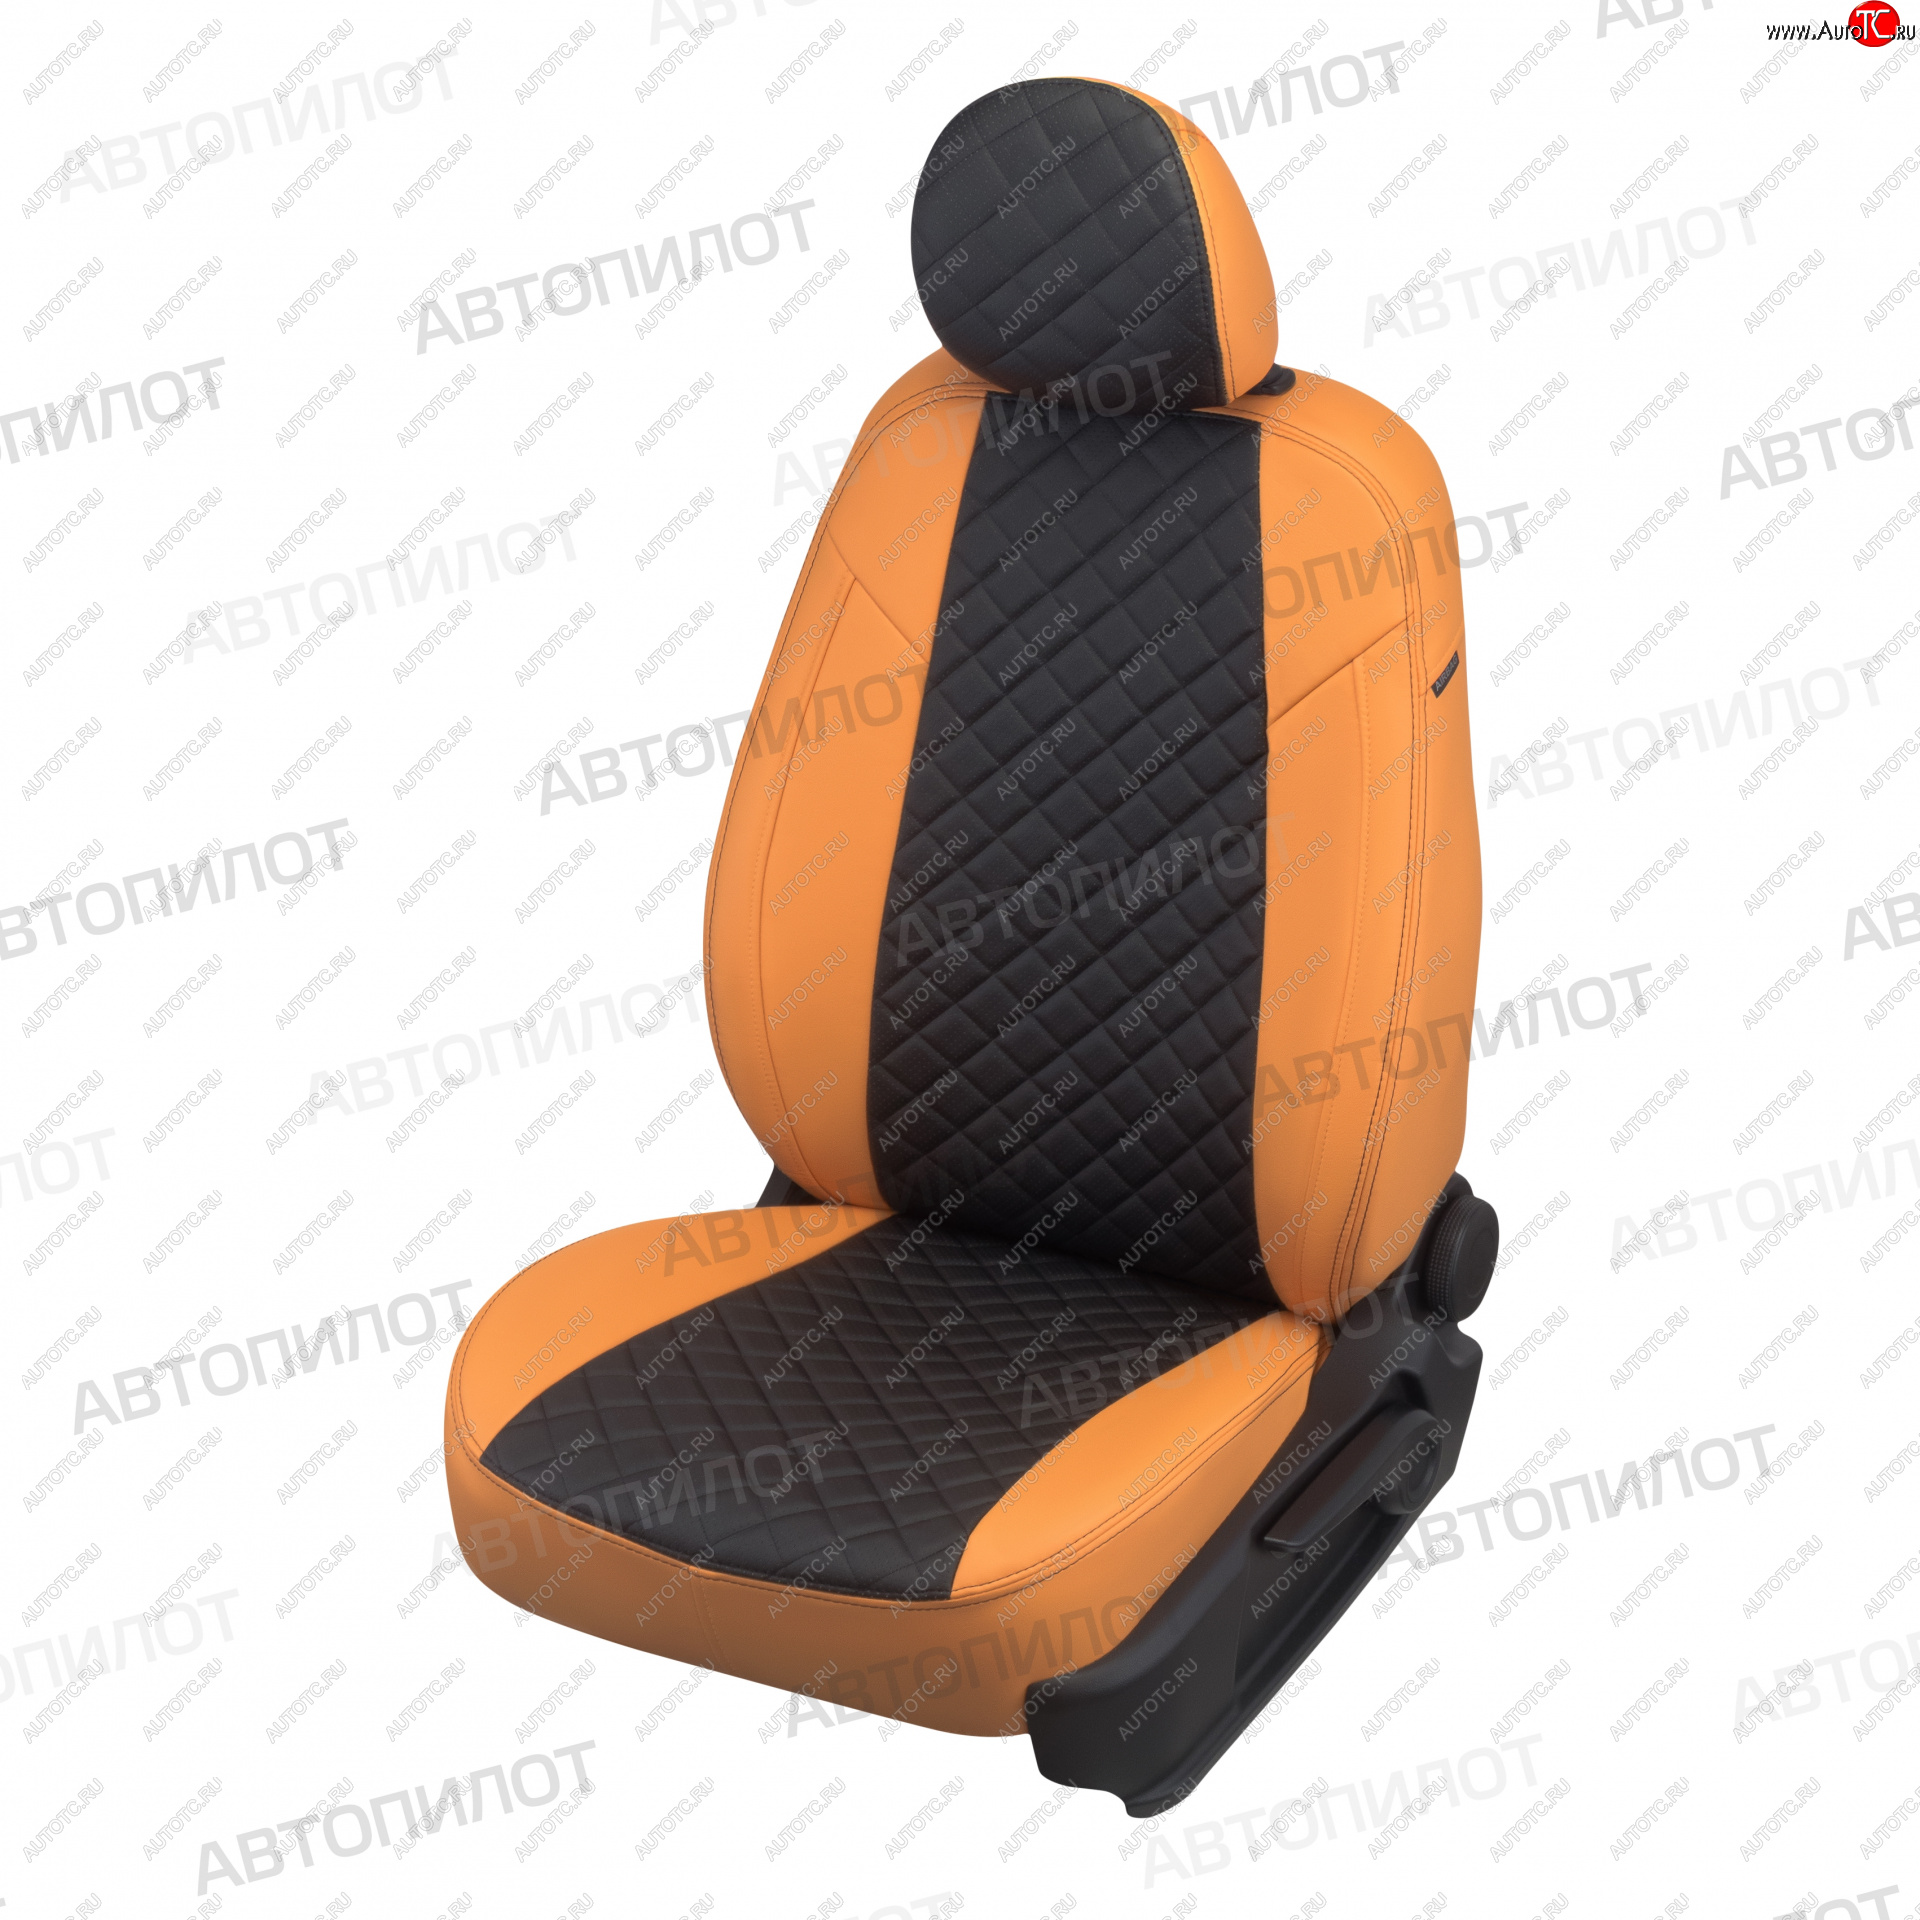 13 999 р. Чехлы сидений (5 мест, экокожа) Автопилот Ромб  Ford Galaxy  WGR (1995-2006) (оранж/черный)